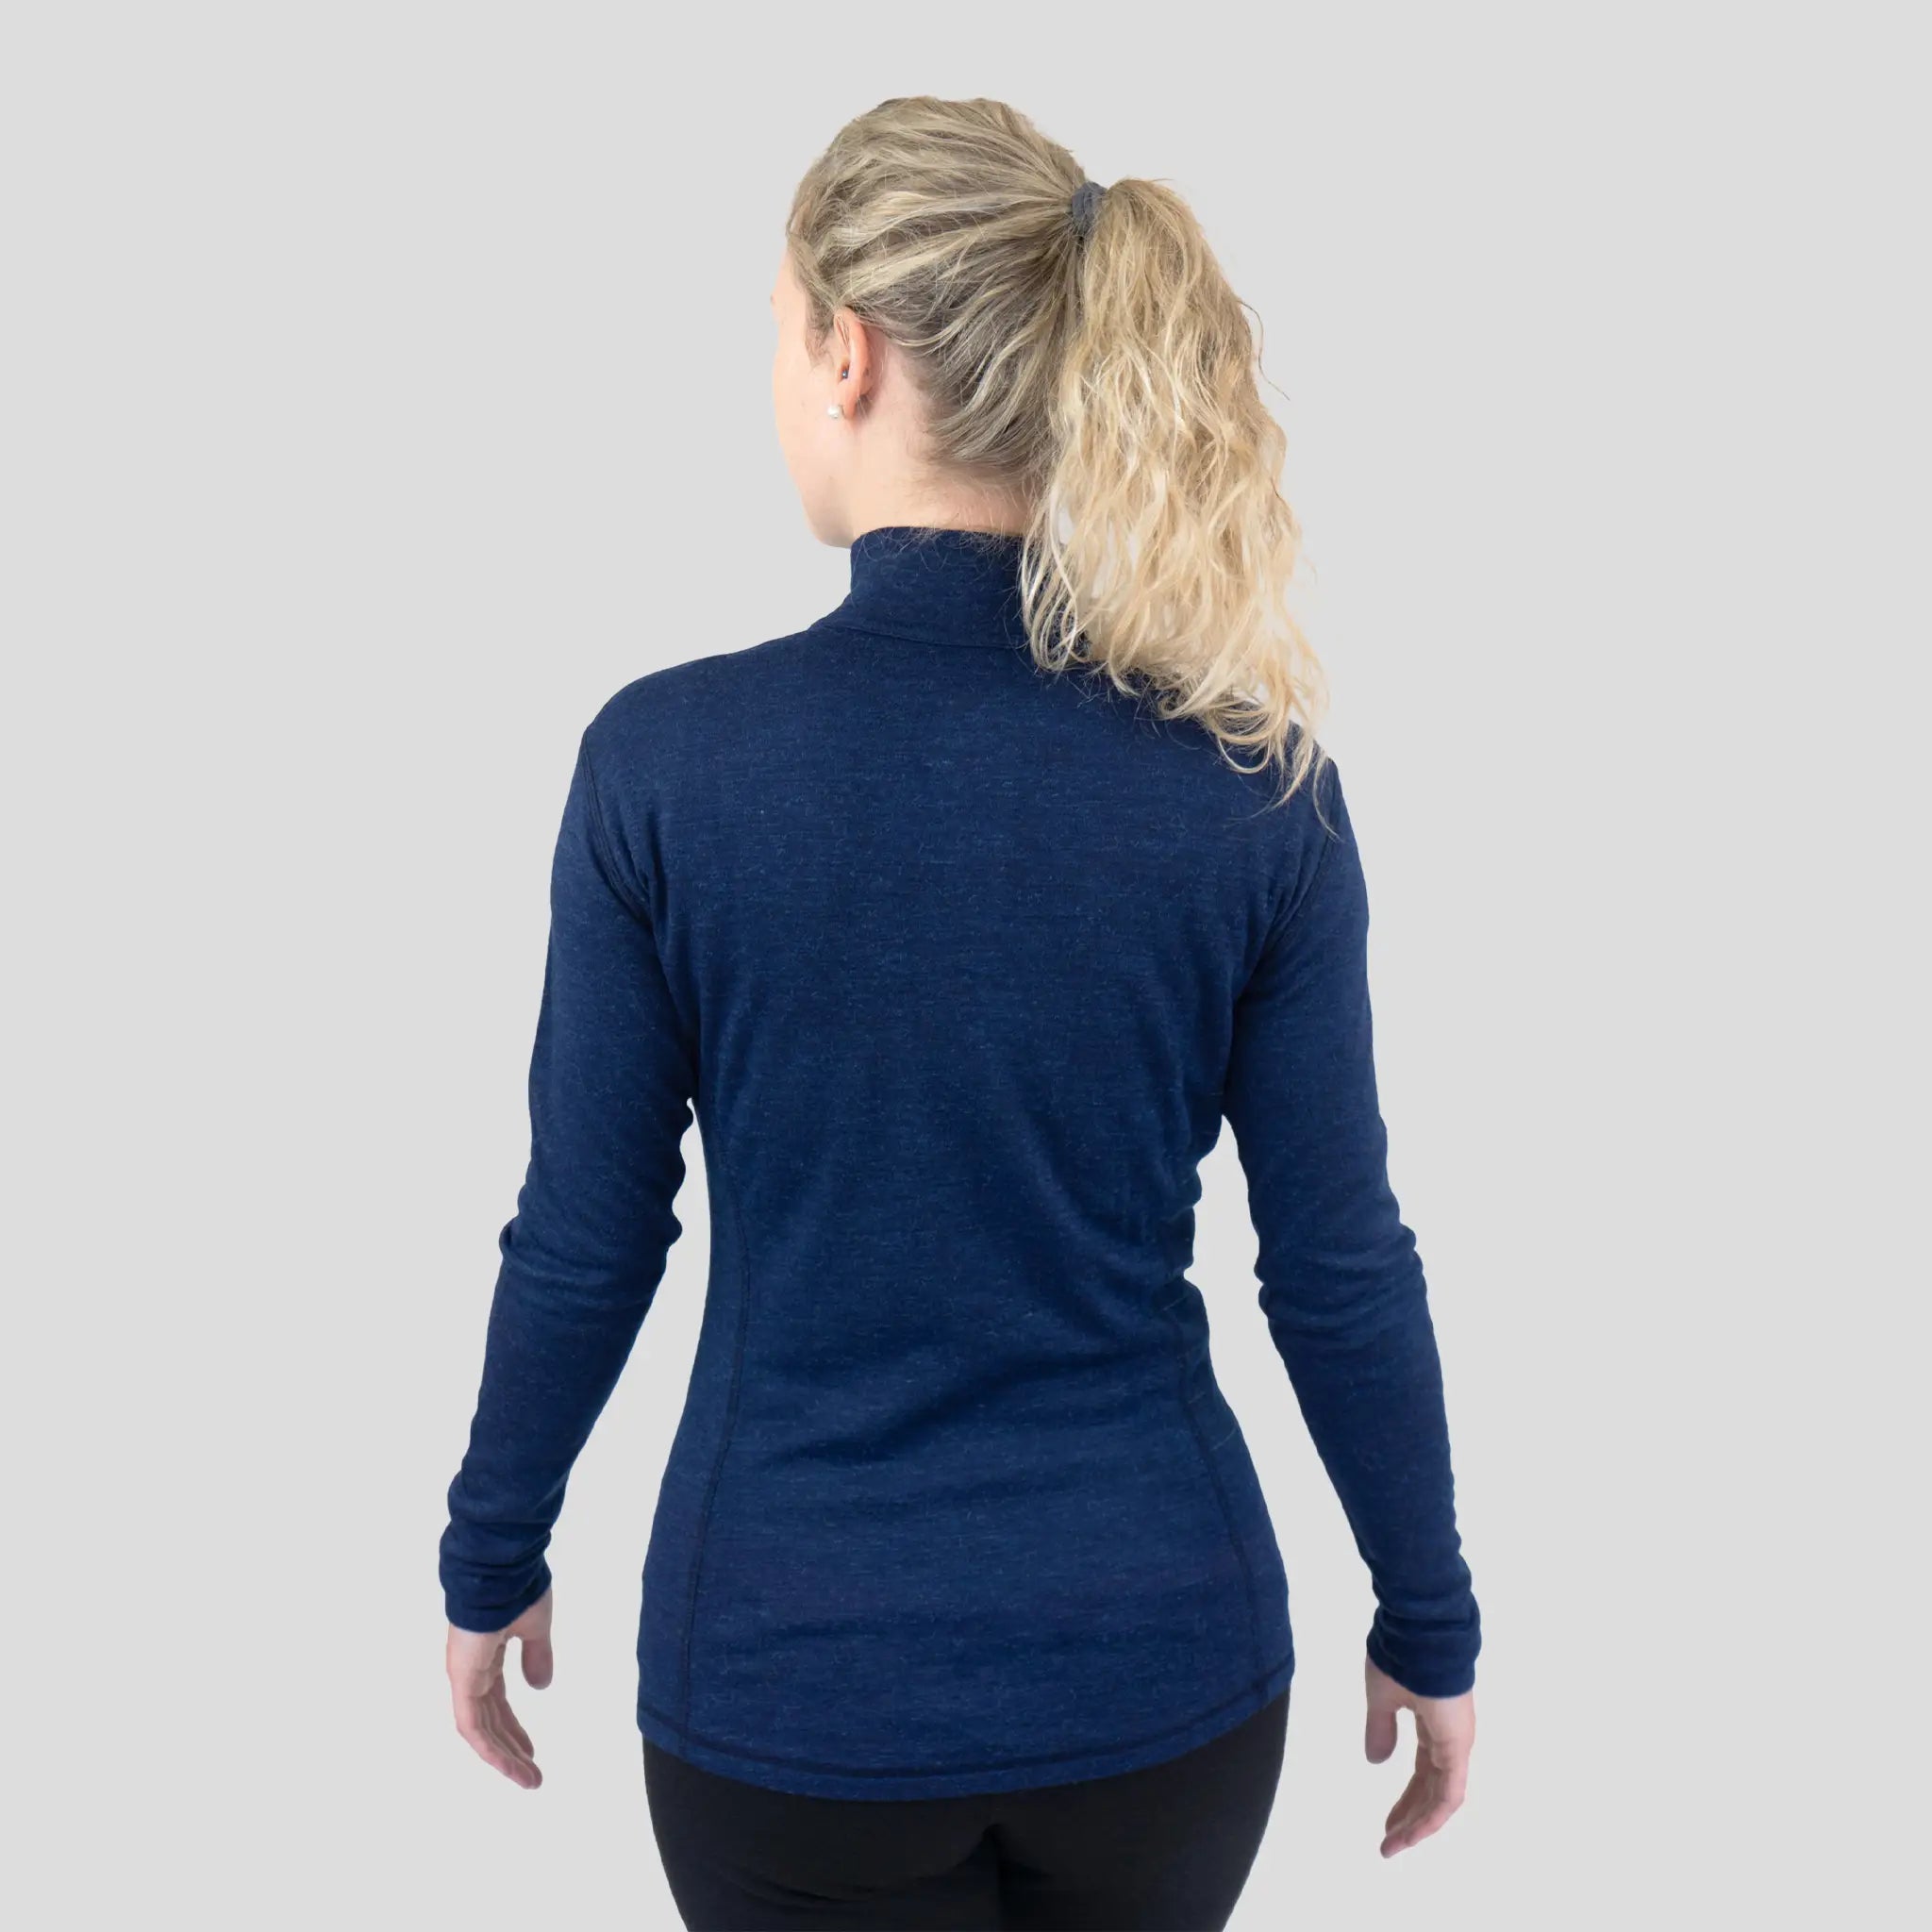 Women's Alpaca Wool Base Layer: 300 Lightweight Half-Zip color Natural Blue